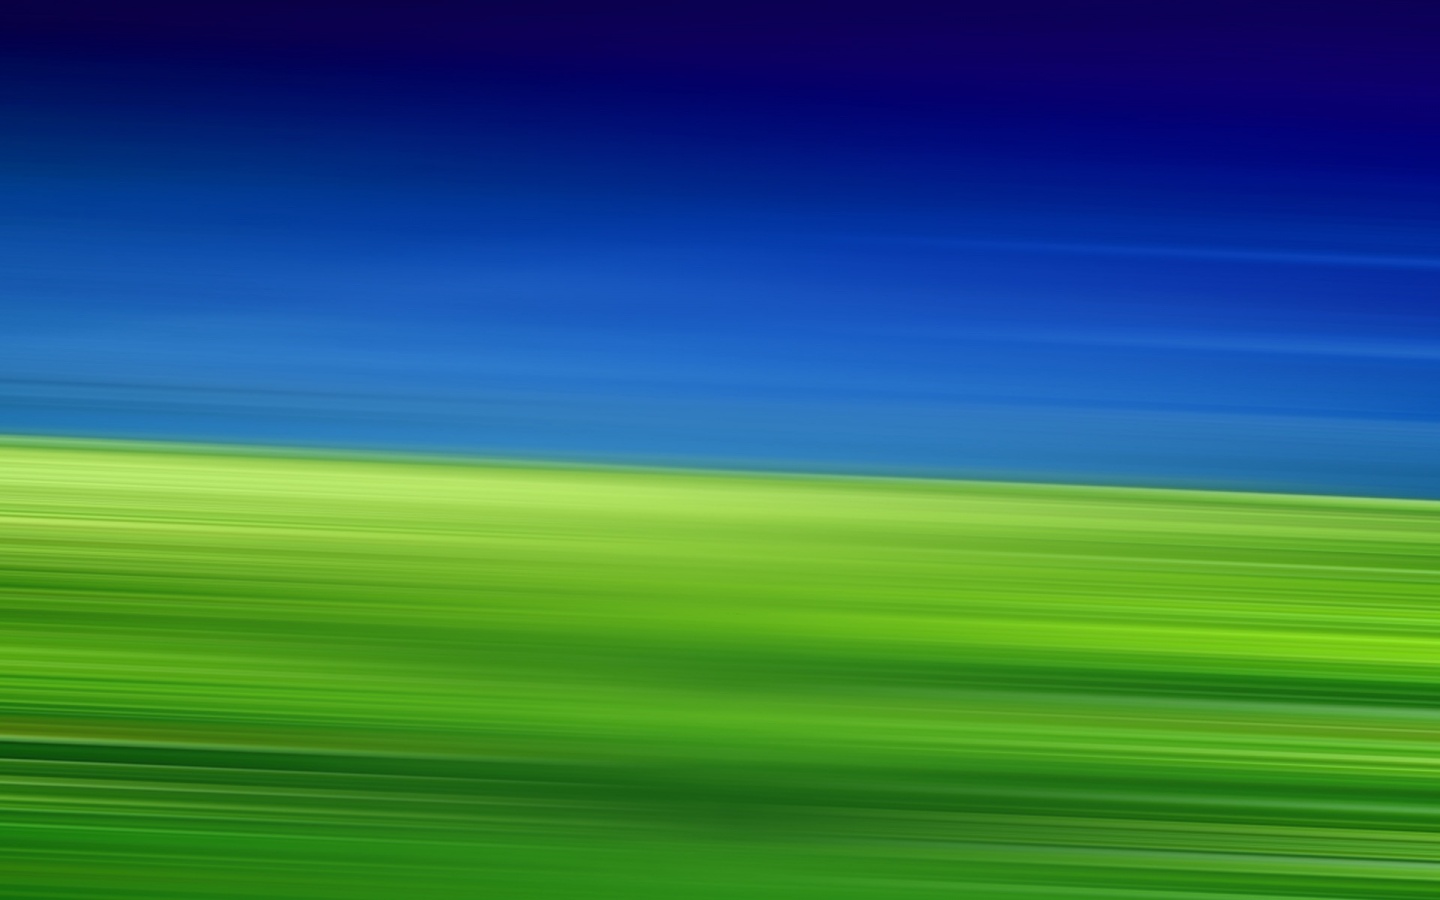 1440x900 Green and Dark Blue desktop PC and Mac wallpaper